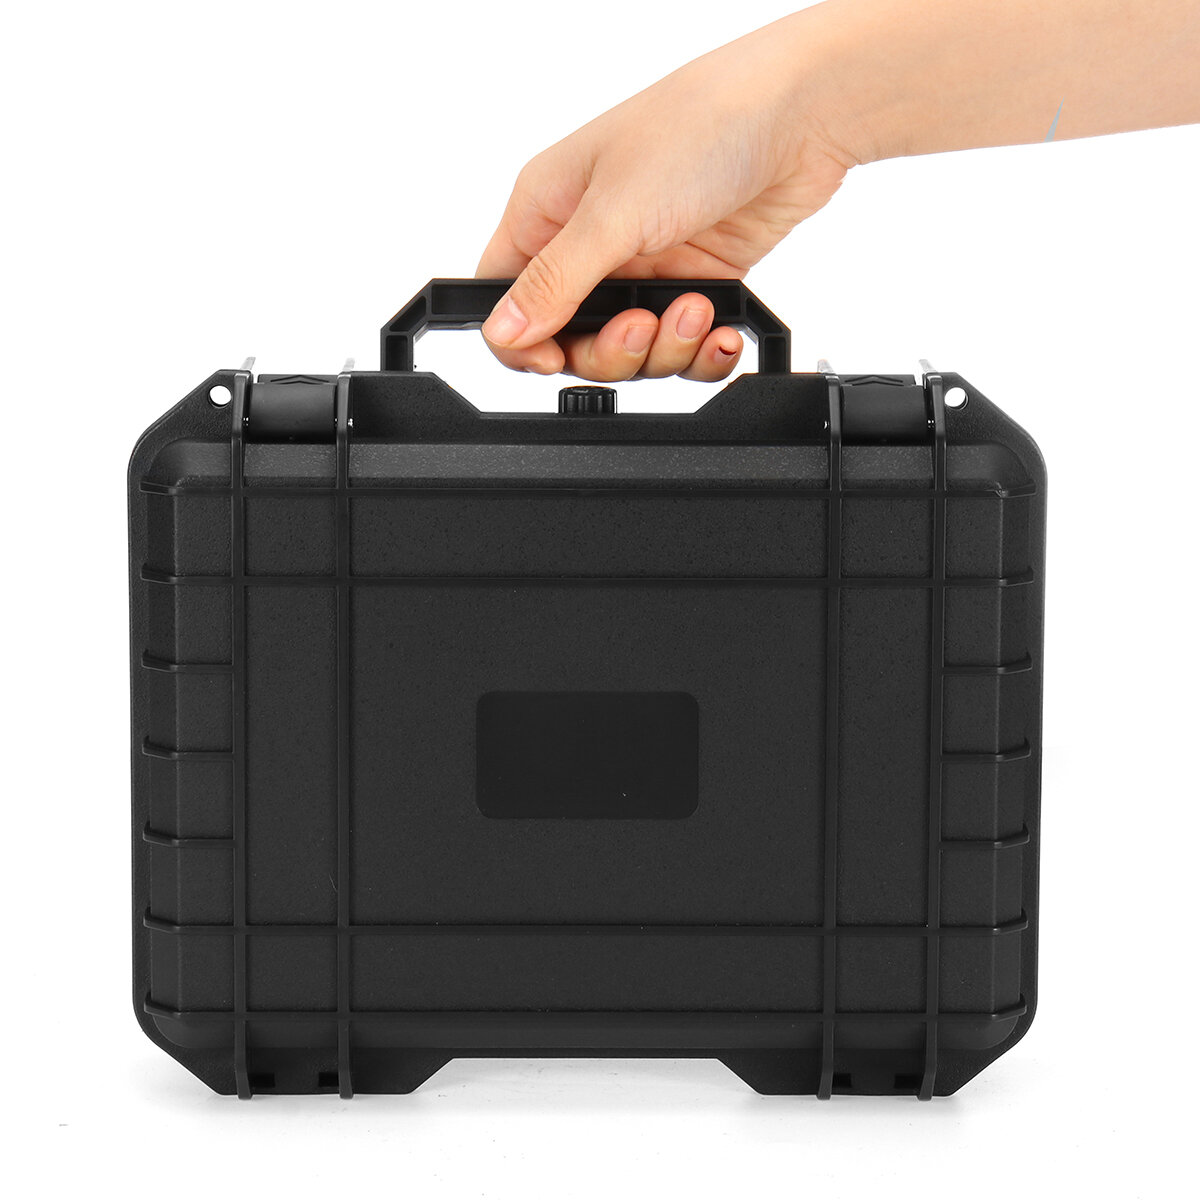 Waterproof Hard Carry Case Tool Kits Impact Resistant Shockproof Storage Box New